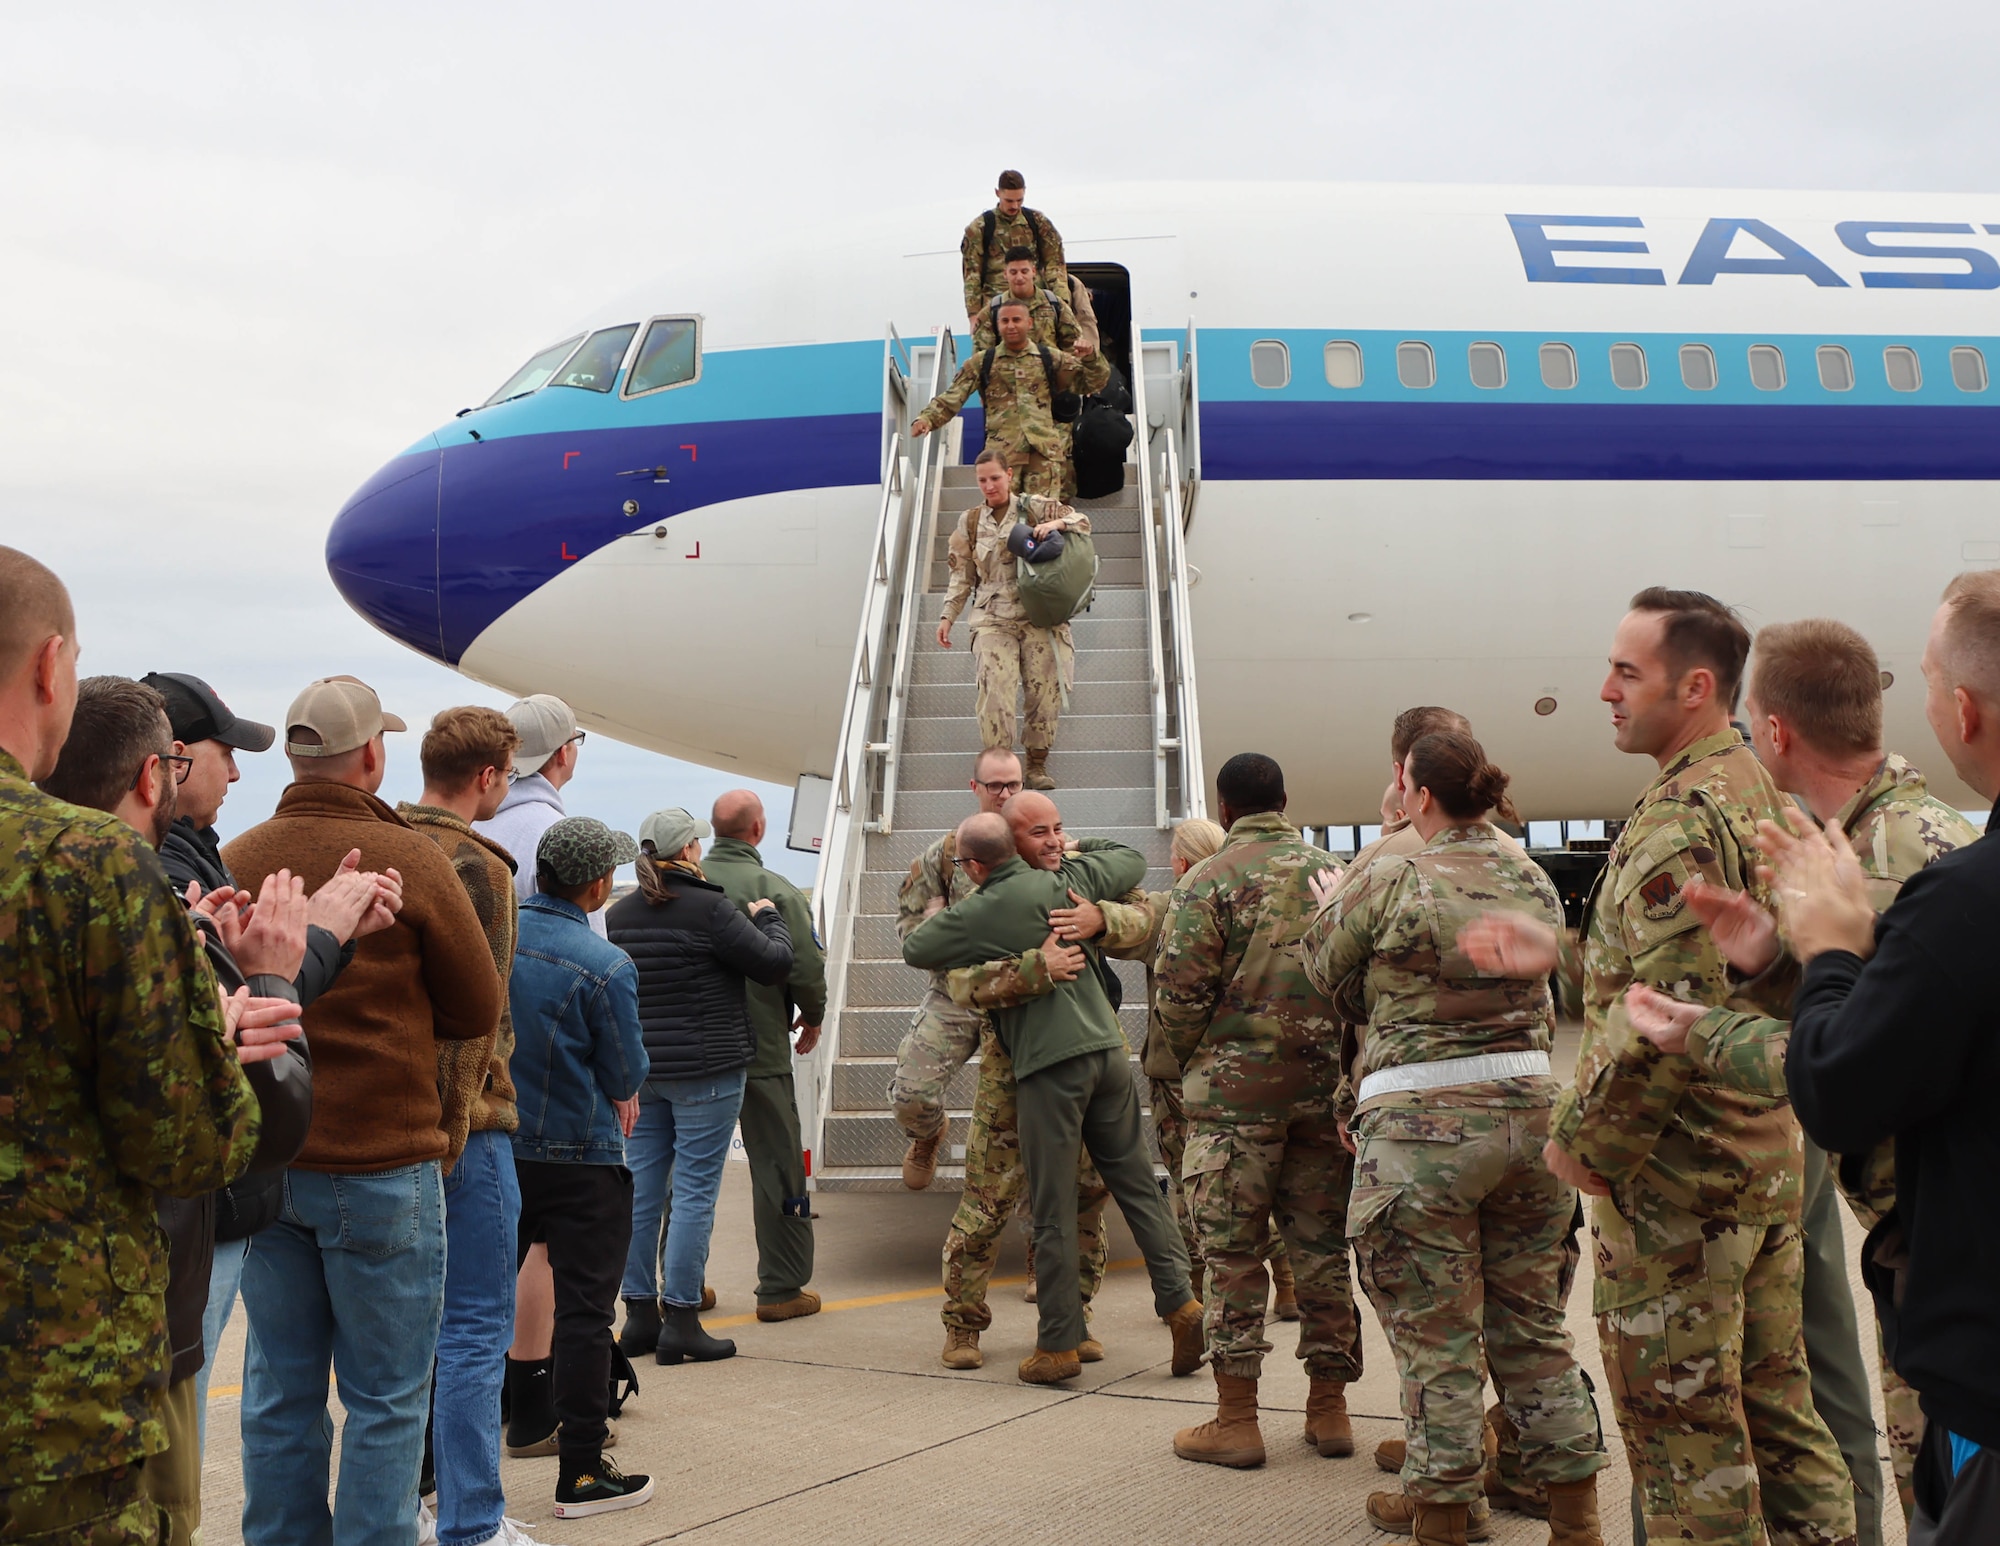 Airmen disembark aircraft upon their return home.